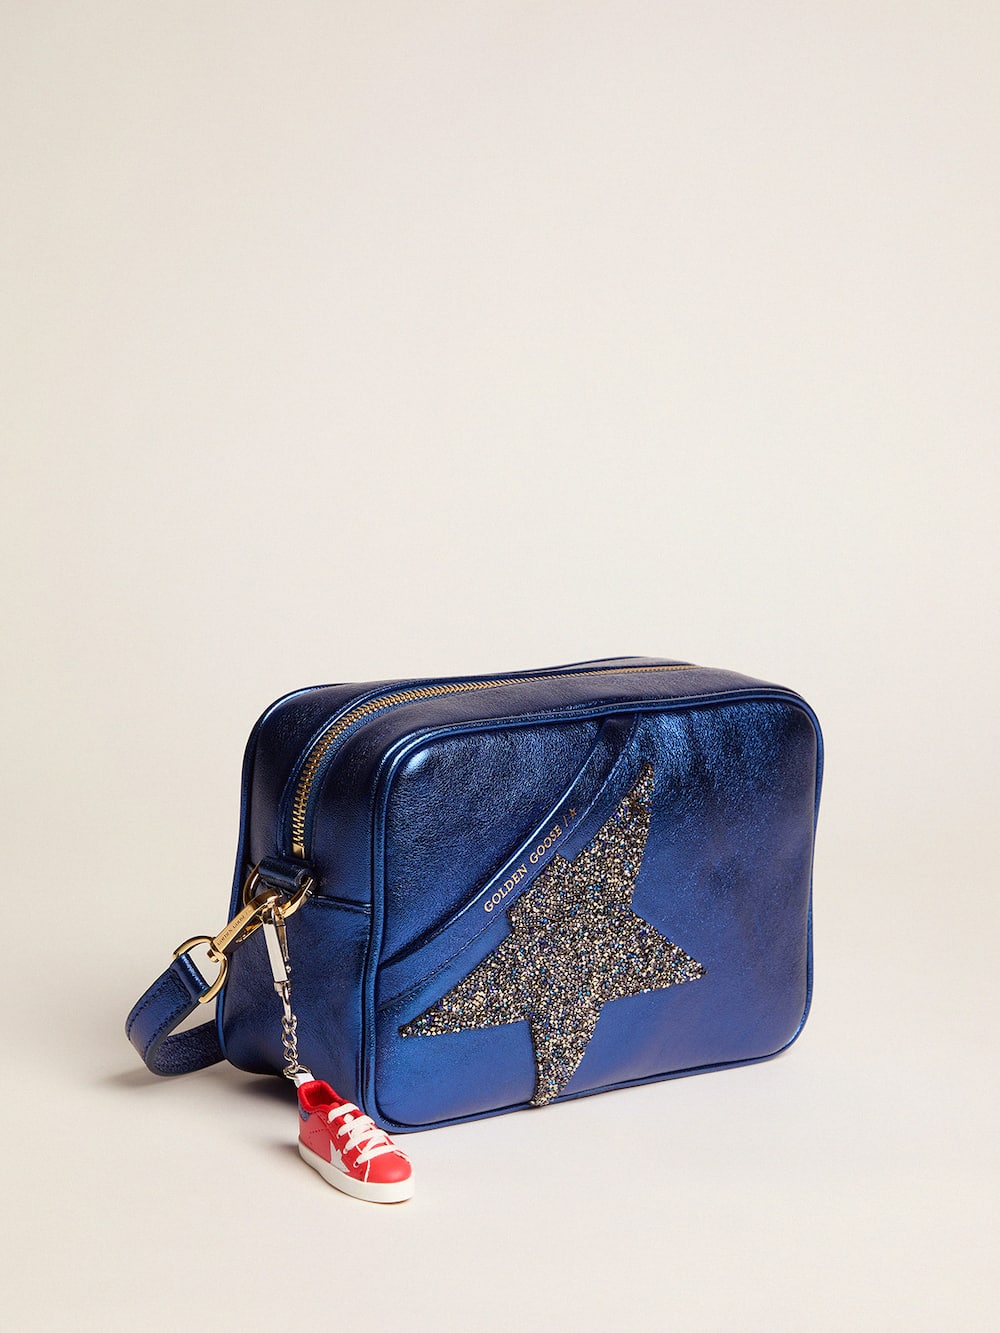 Golden Goose - Sac Star Bag en cuir lamé bleu avec étoile Swarovski in 